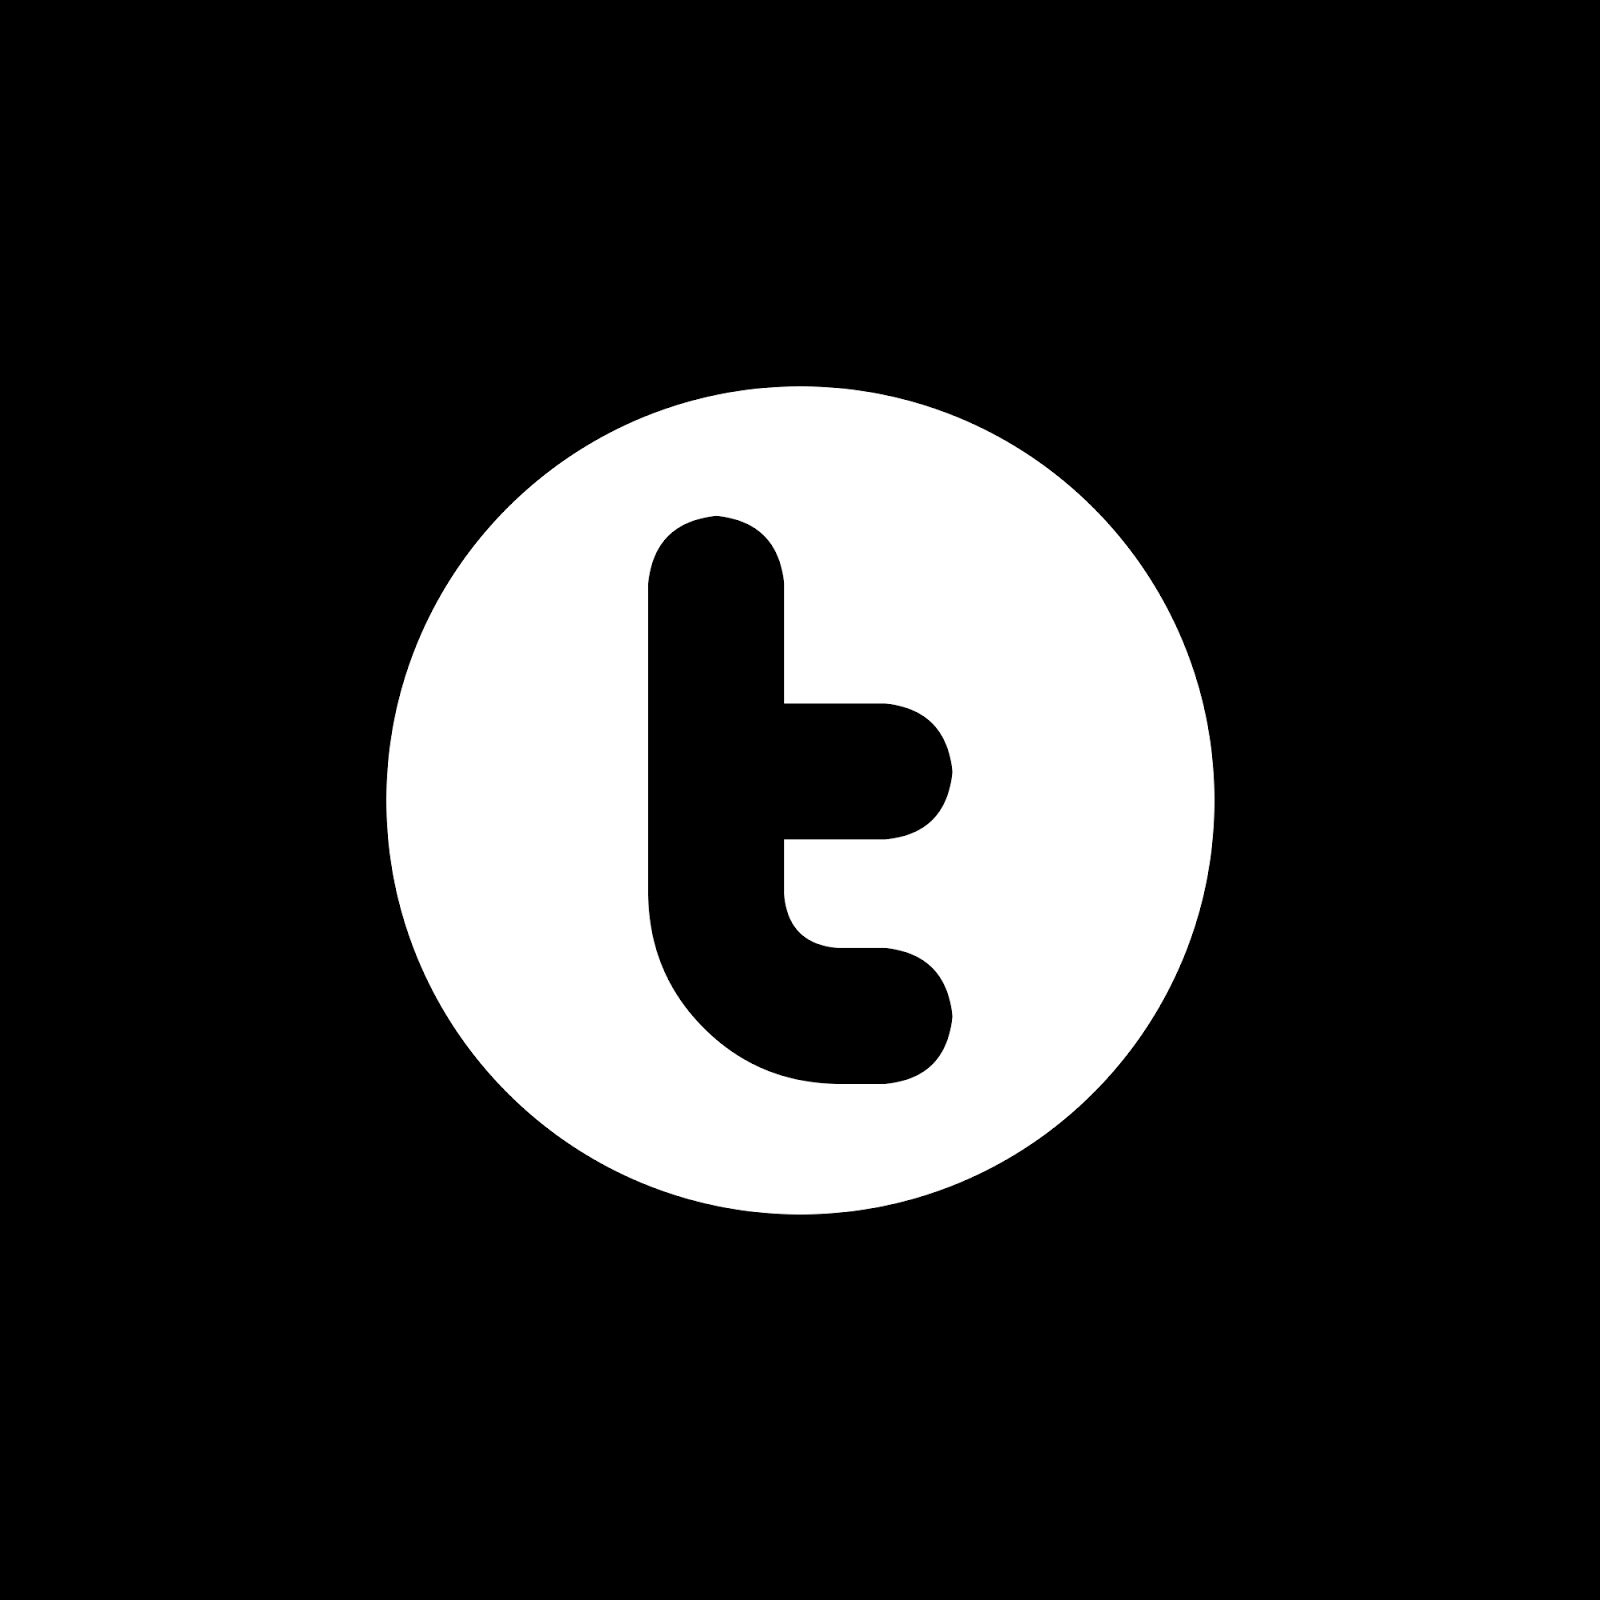 Facebook Twitter Instagram Icons Black Background